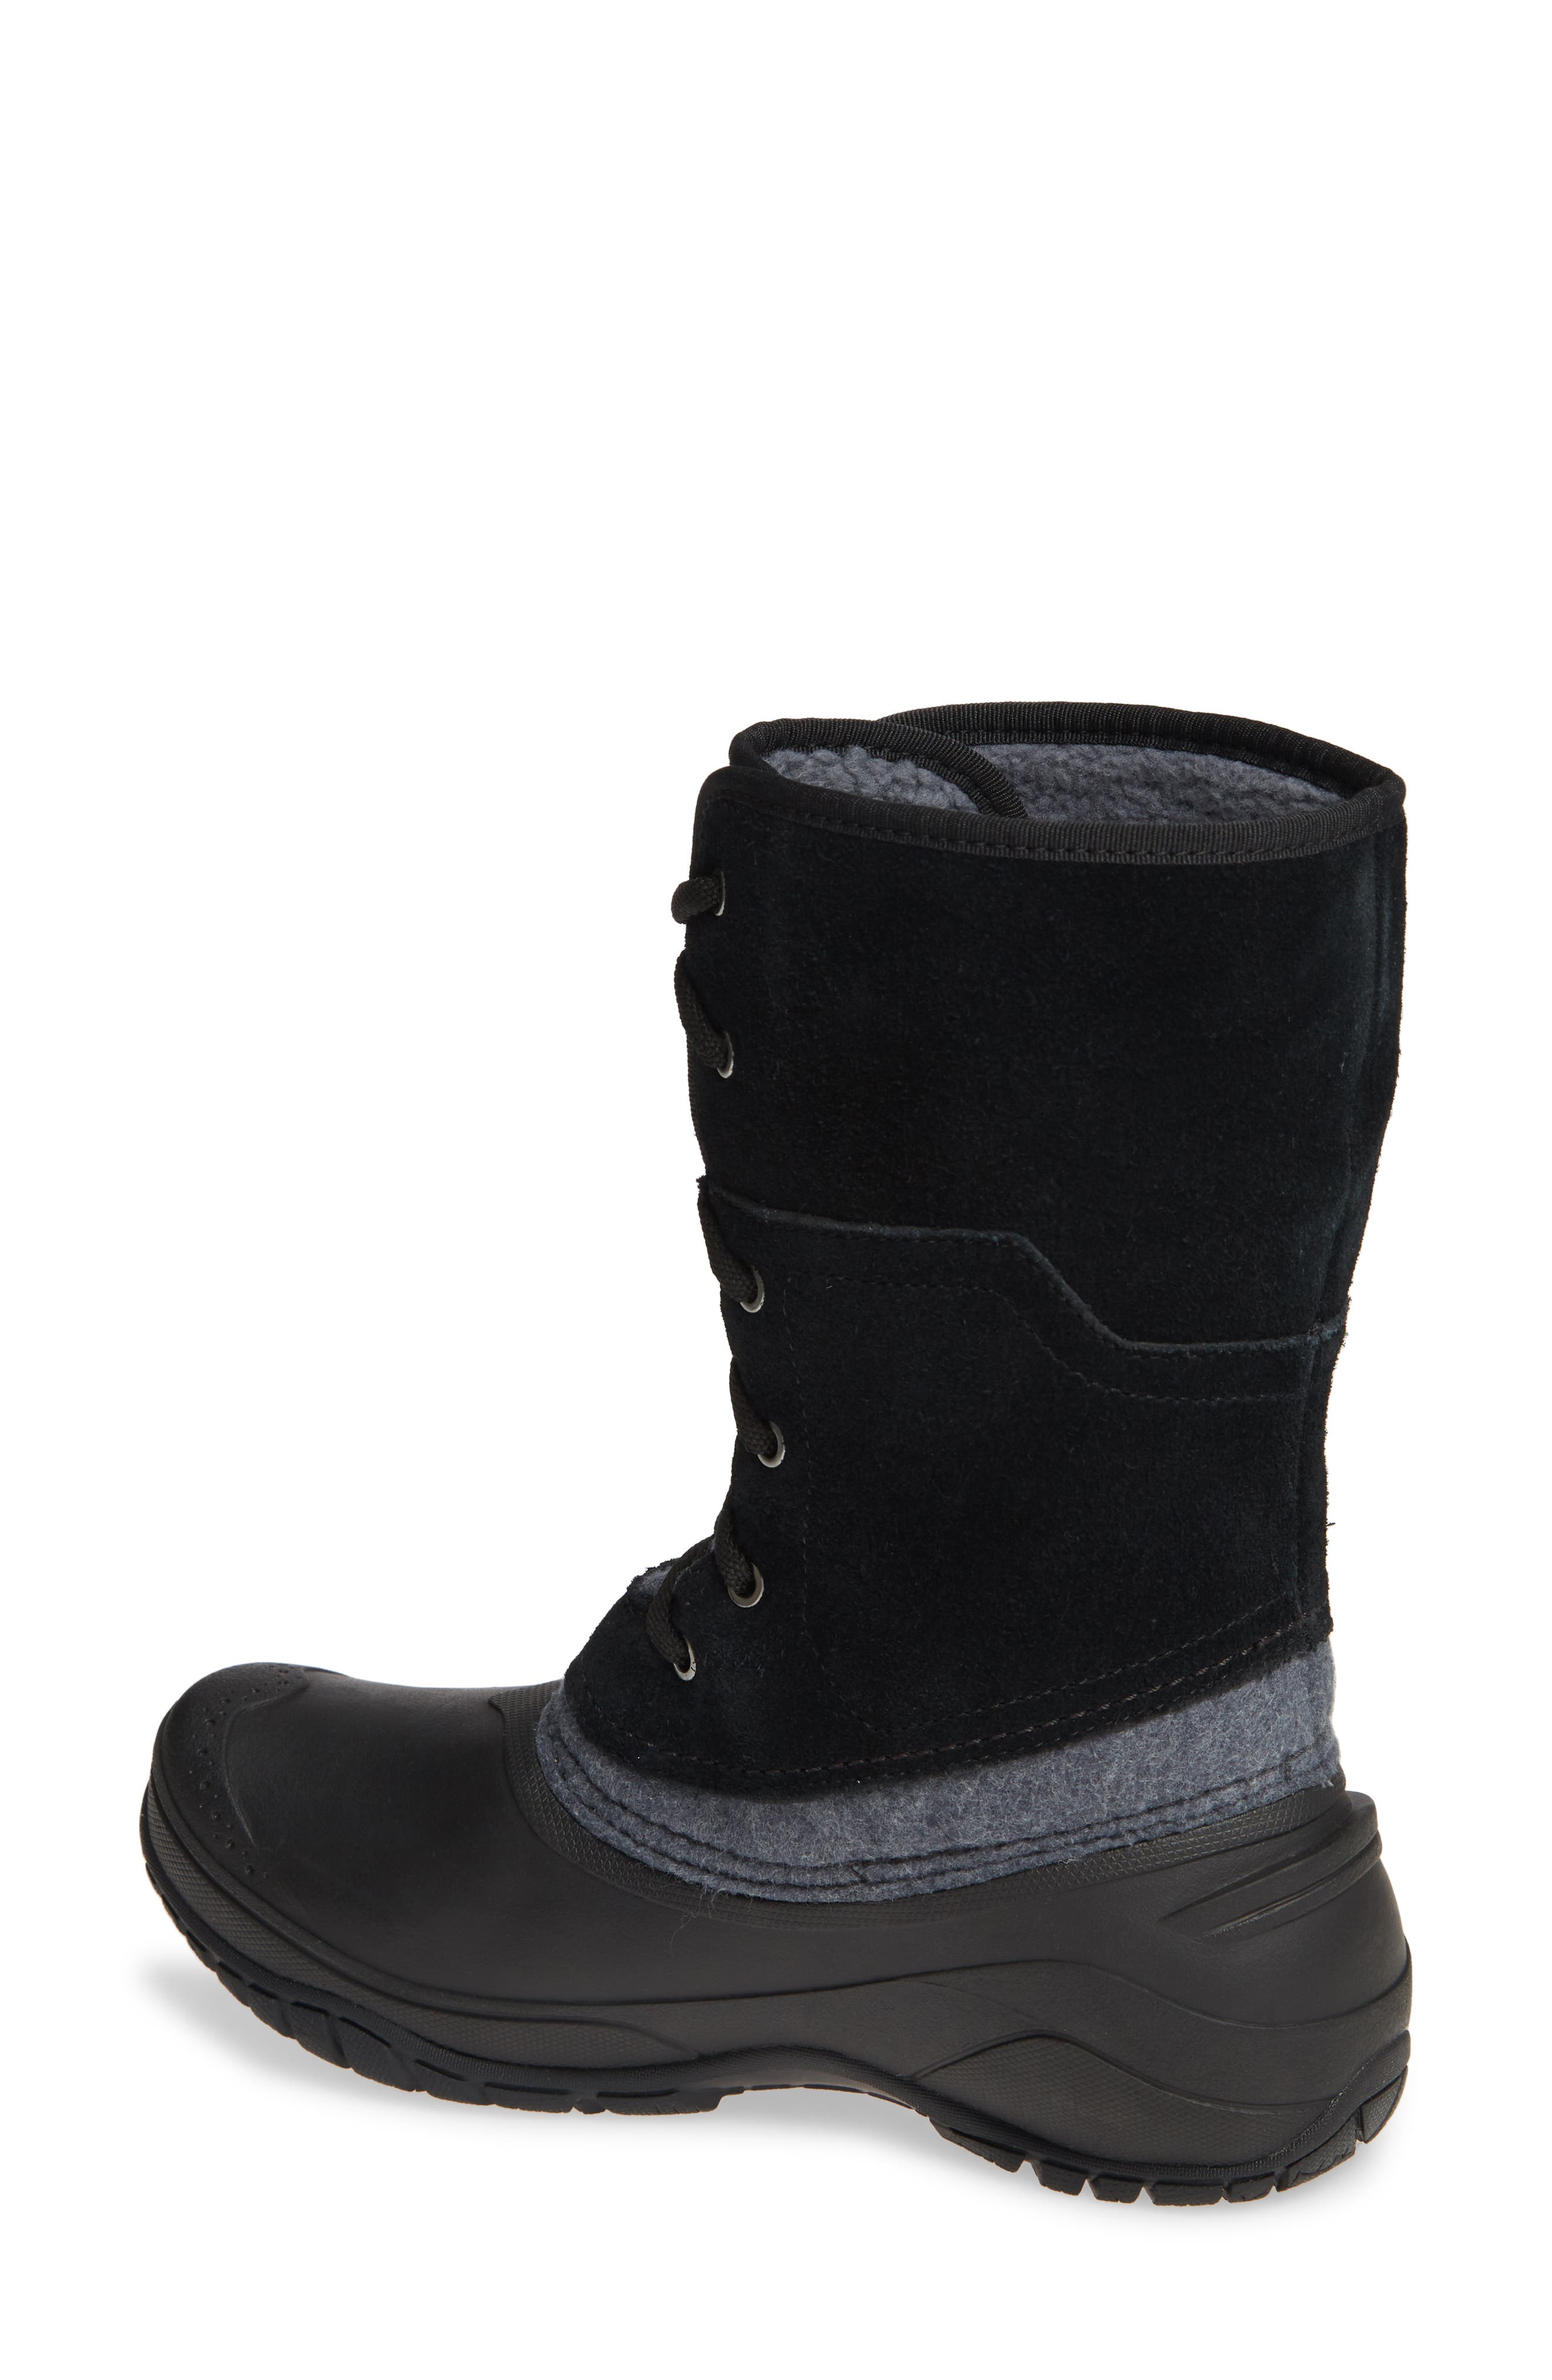 shellista roll cuff waterproof insulated winter boot